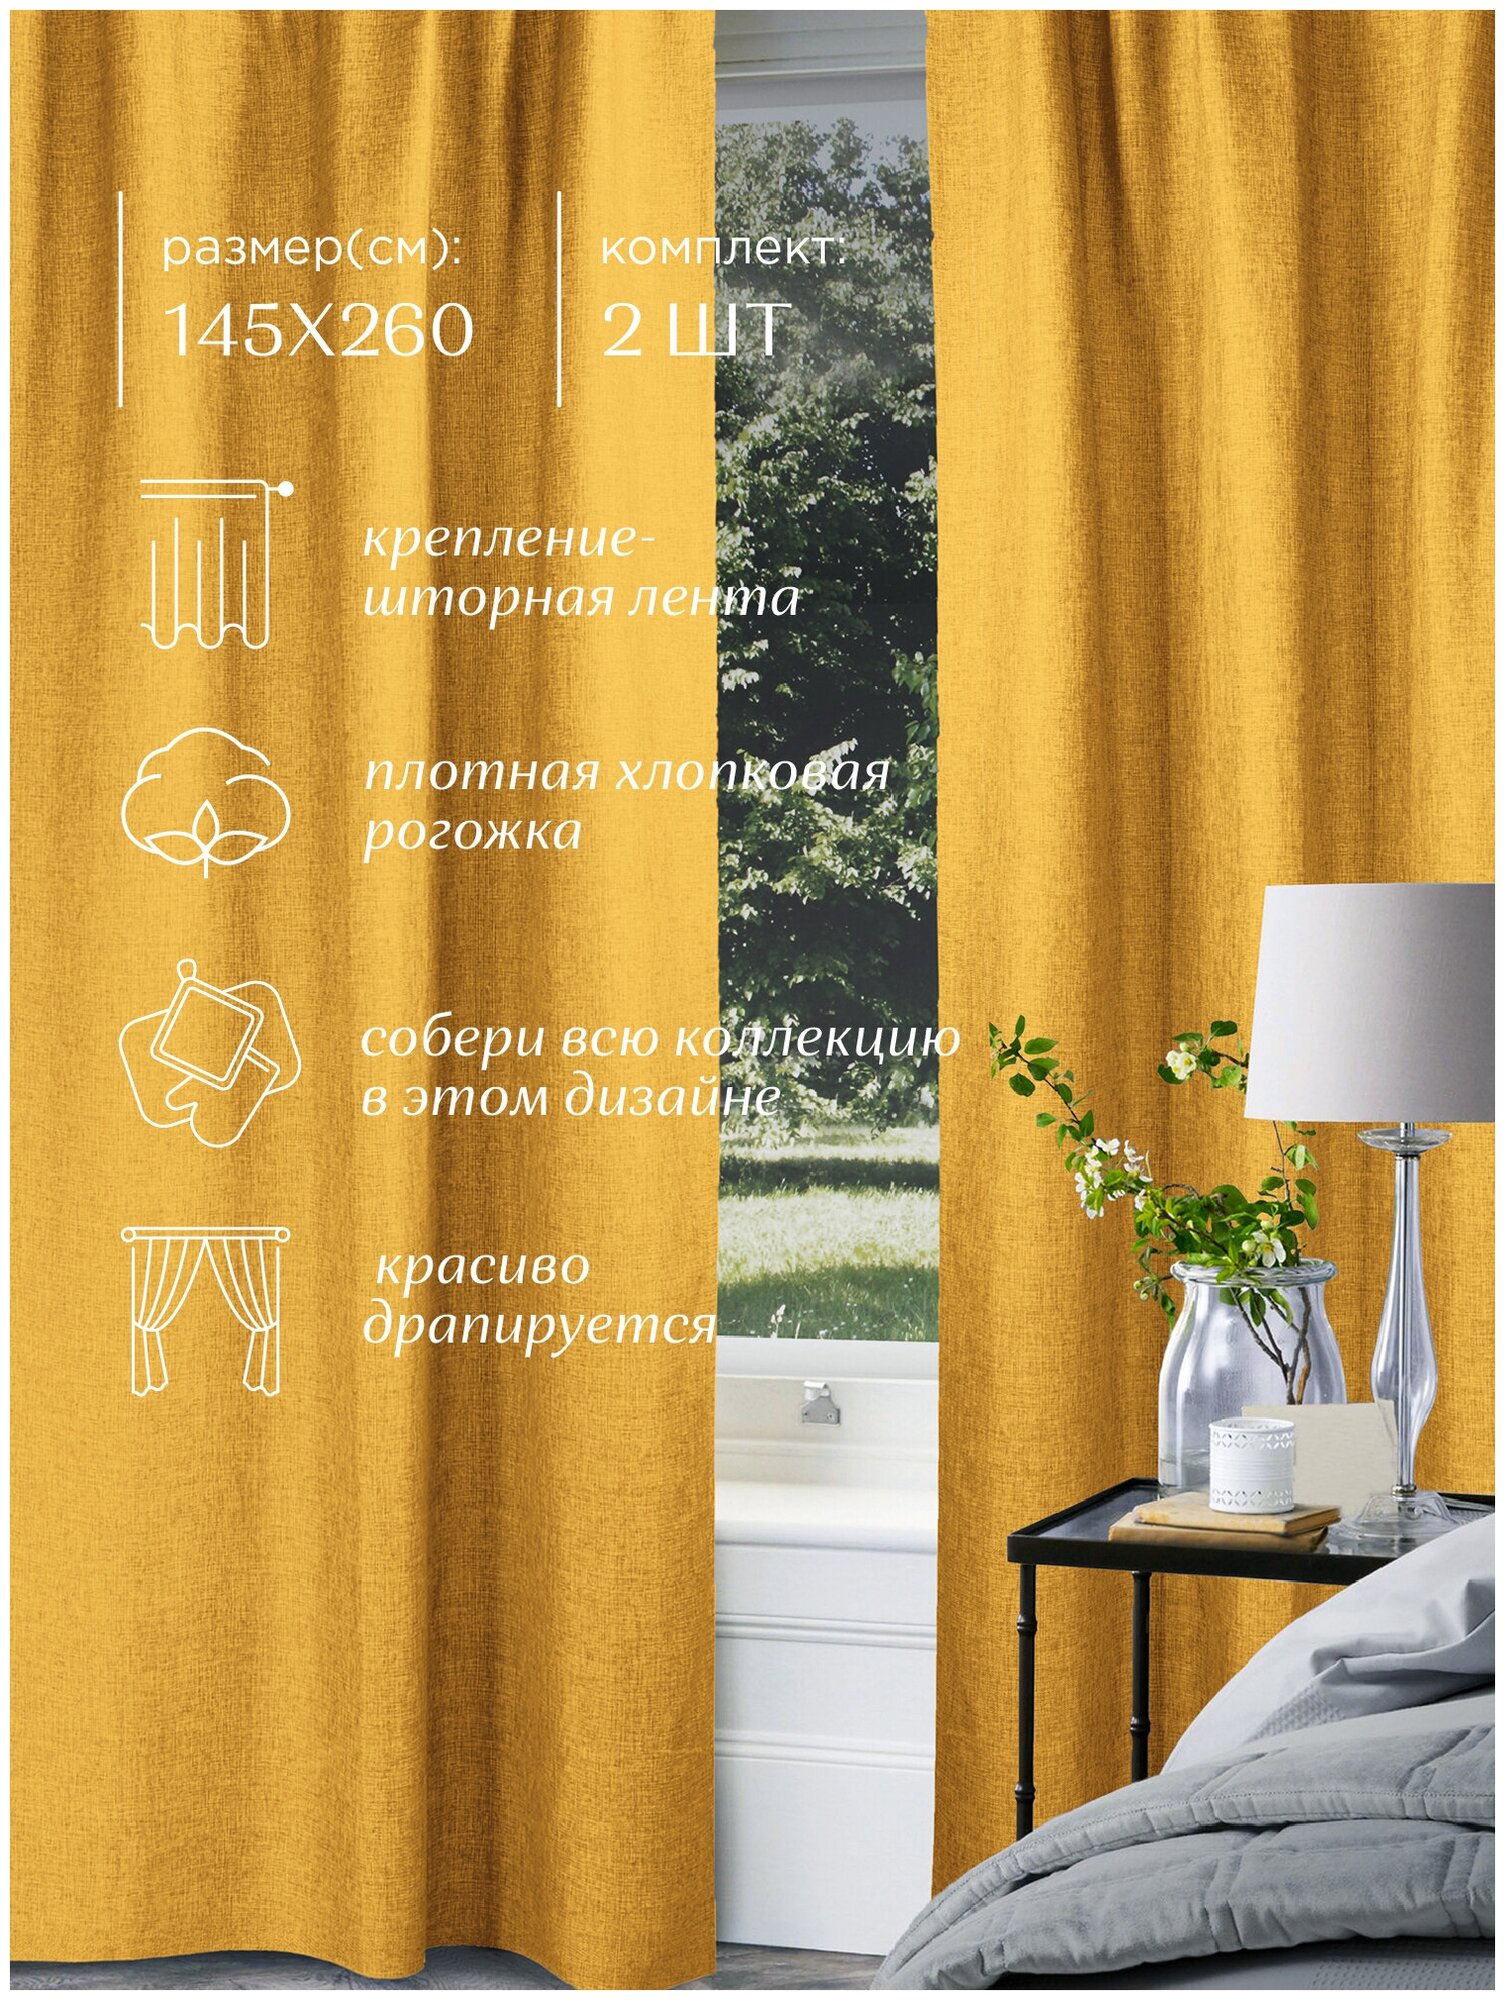 Комплект штор рогожка 145х260 (2 шт.) "Унисон" рис 30004-16 Basic желтый